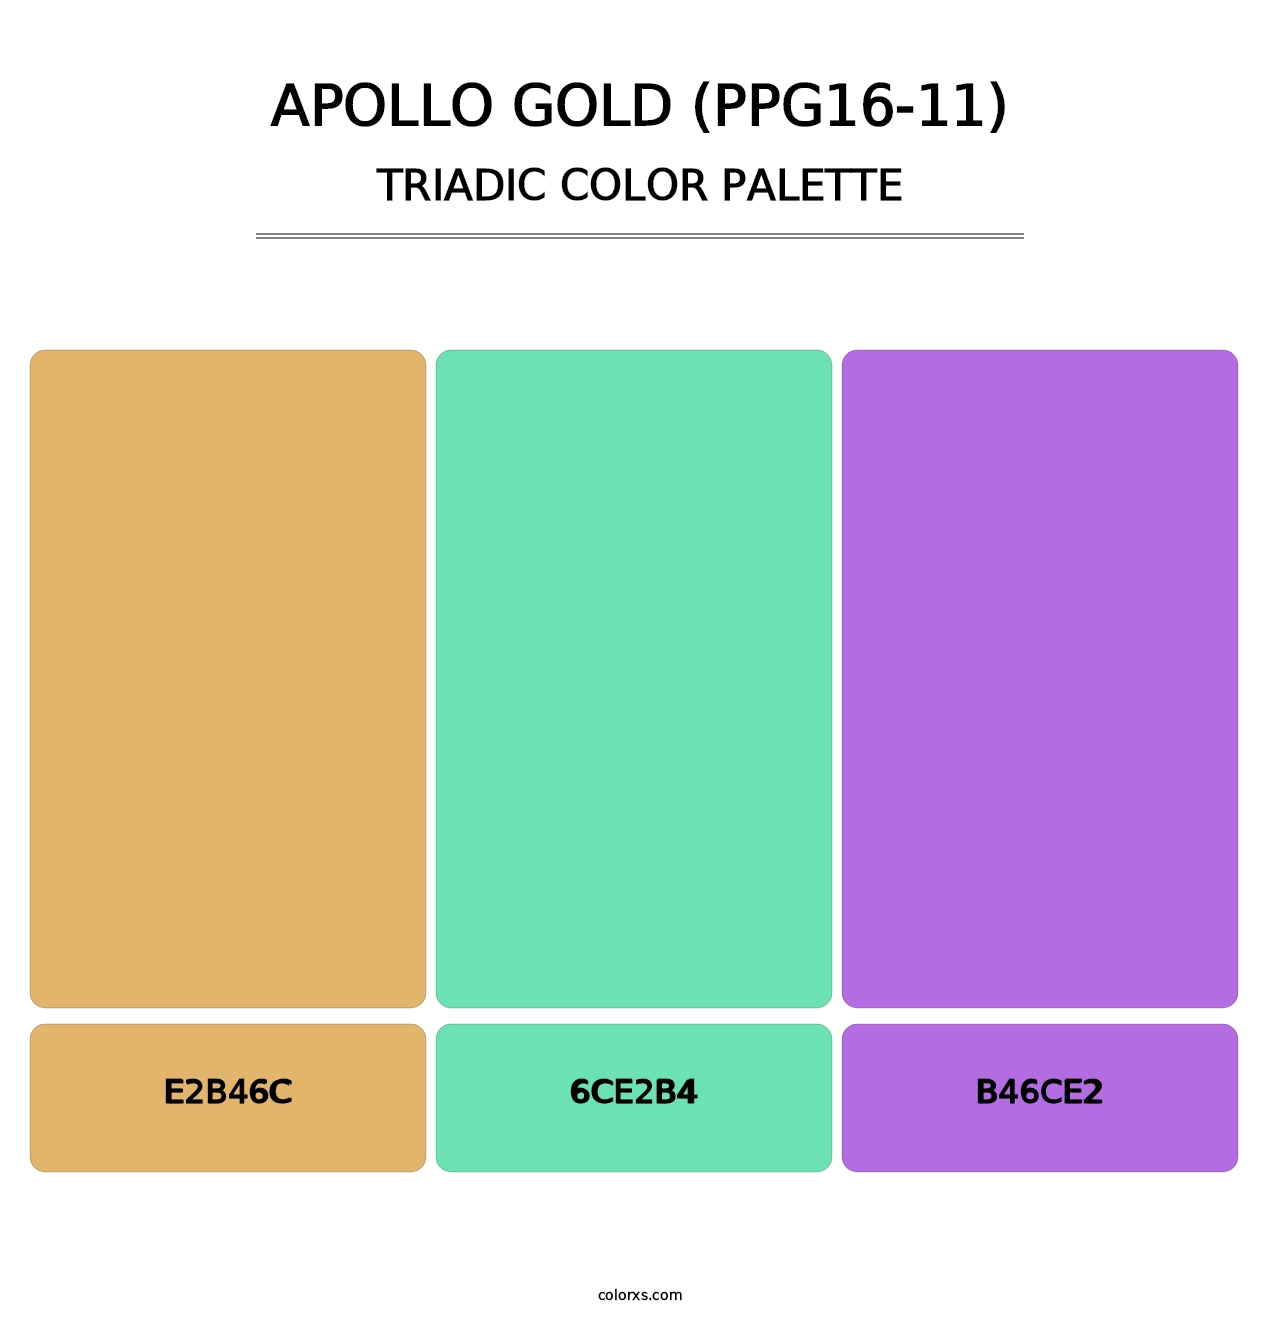 Apollo Gold (PPG16-11) - Triadic Color Palette